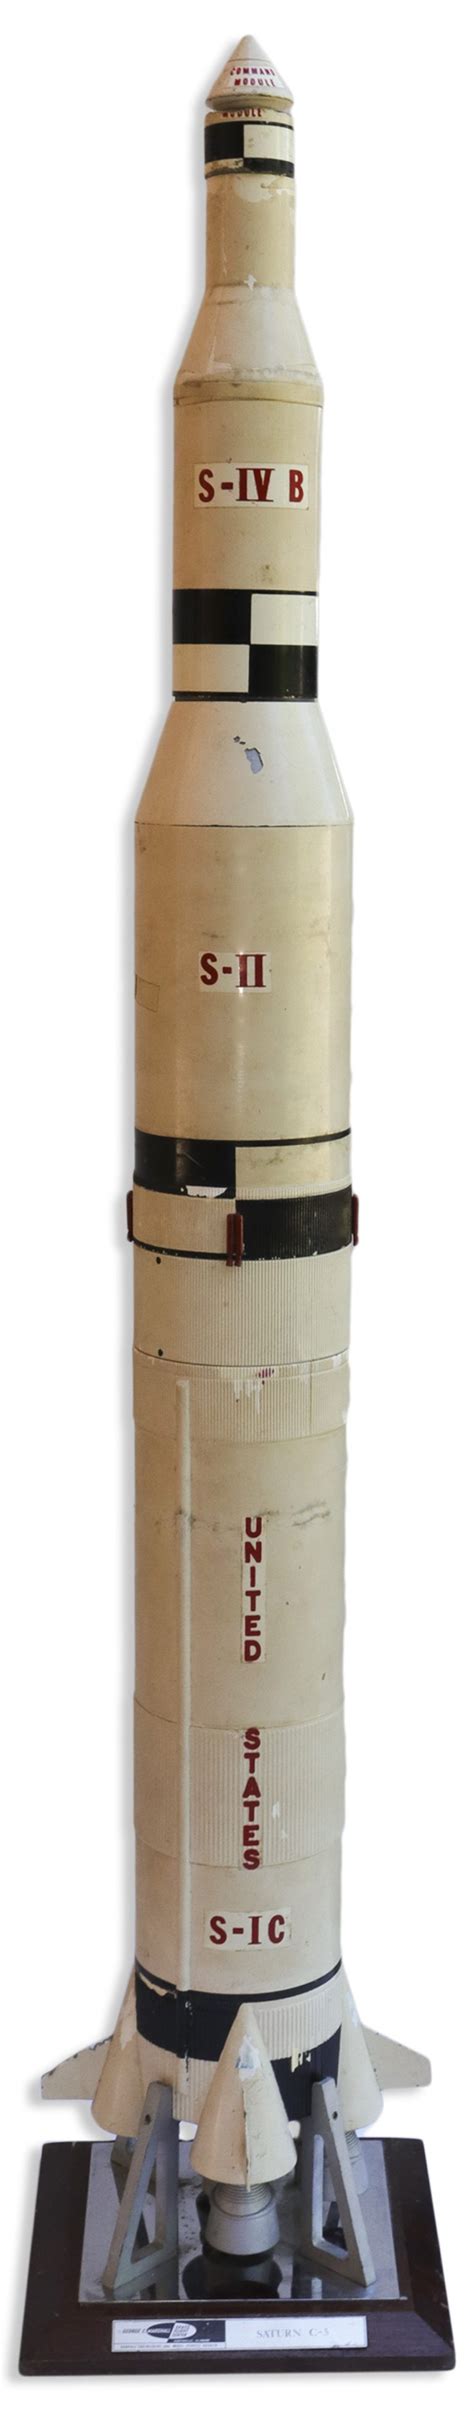 Sell Or Auction Your Original Vintage Apollo Saturn V Rocket Model